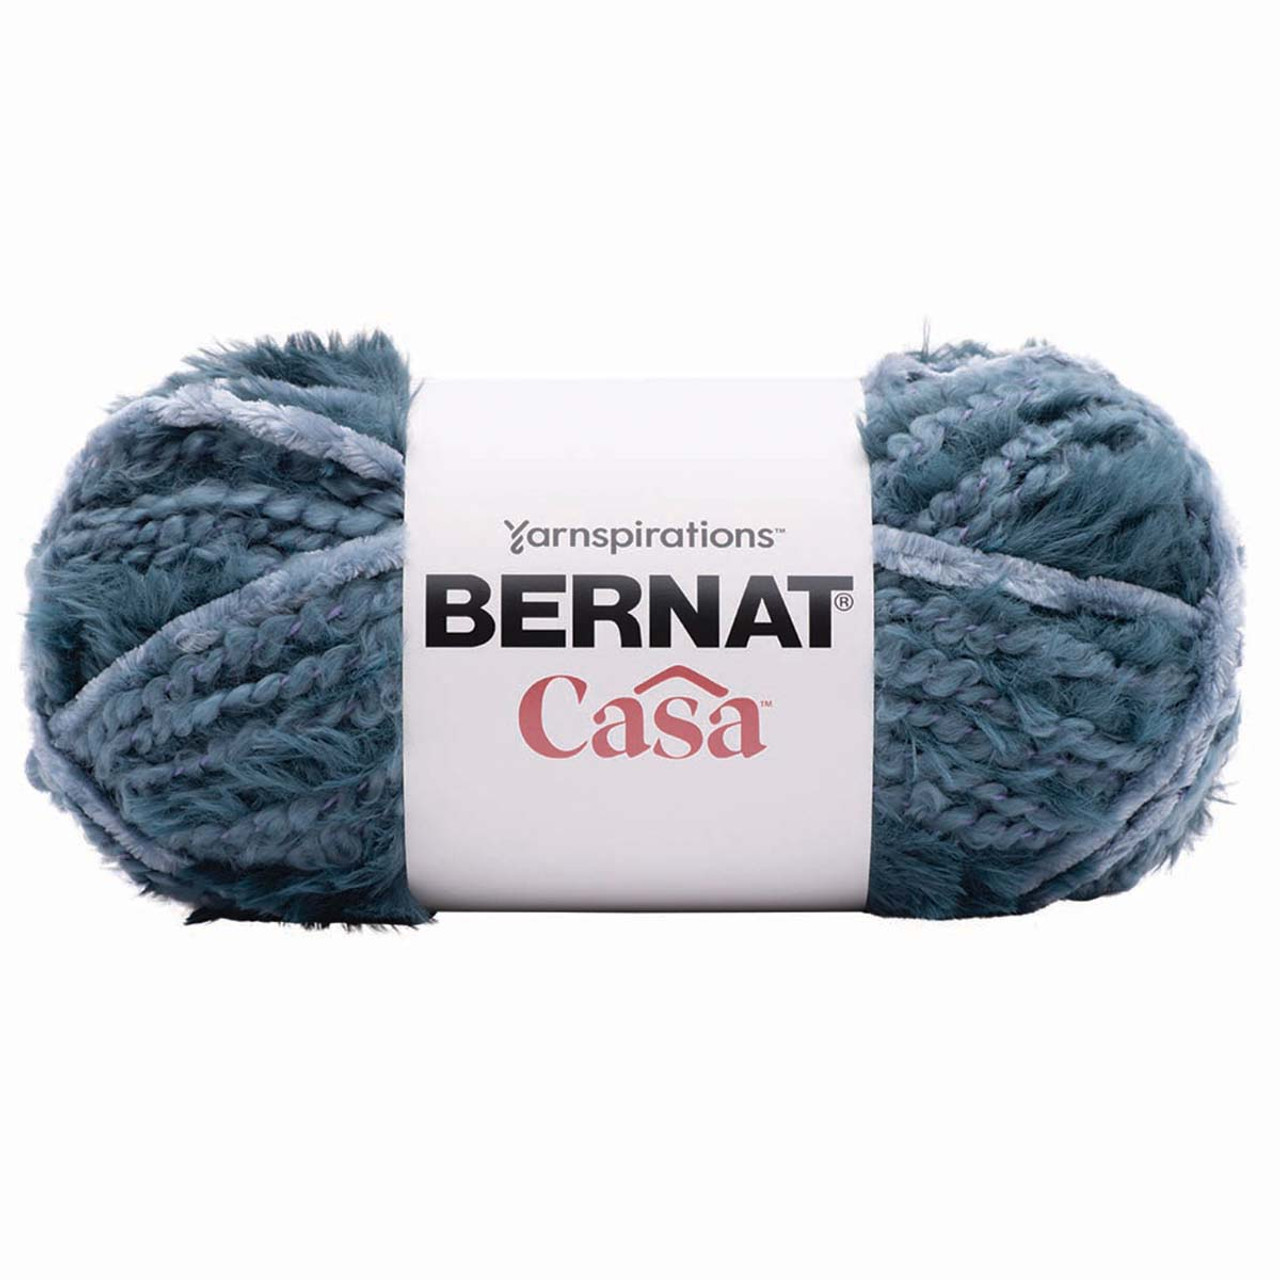 Bernat Pale Grey Blanket Yarn (6 - Super Bulky), Free Shipping at